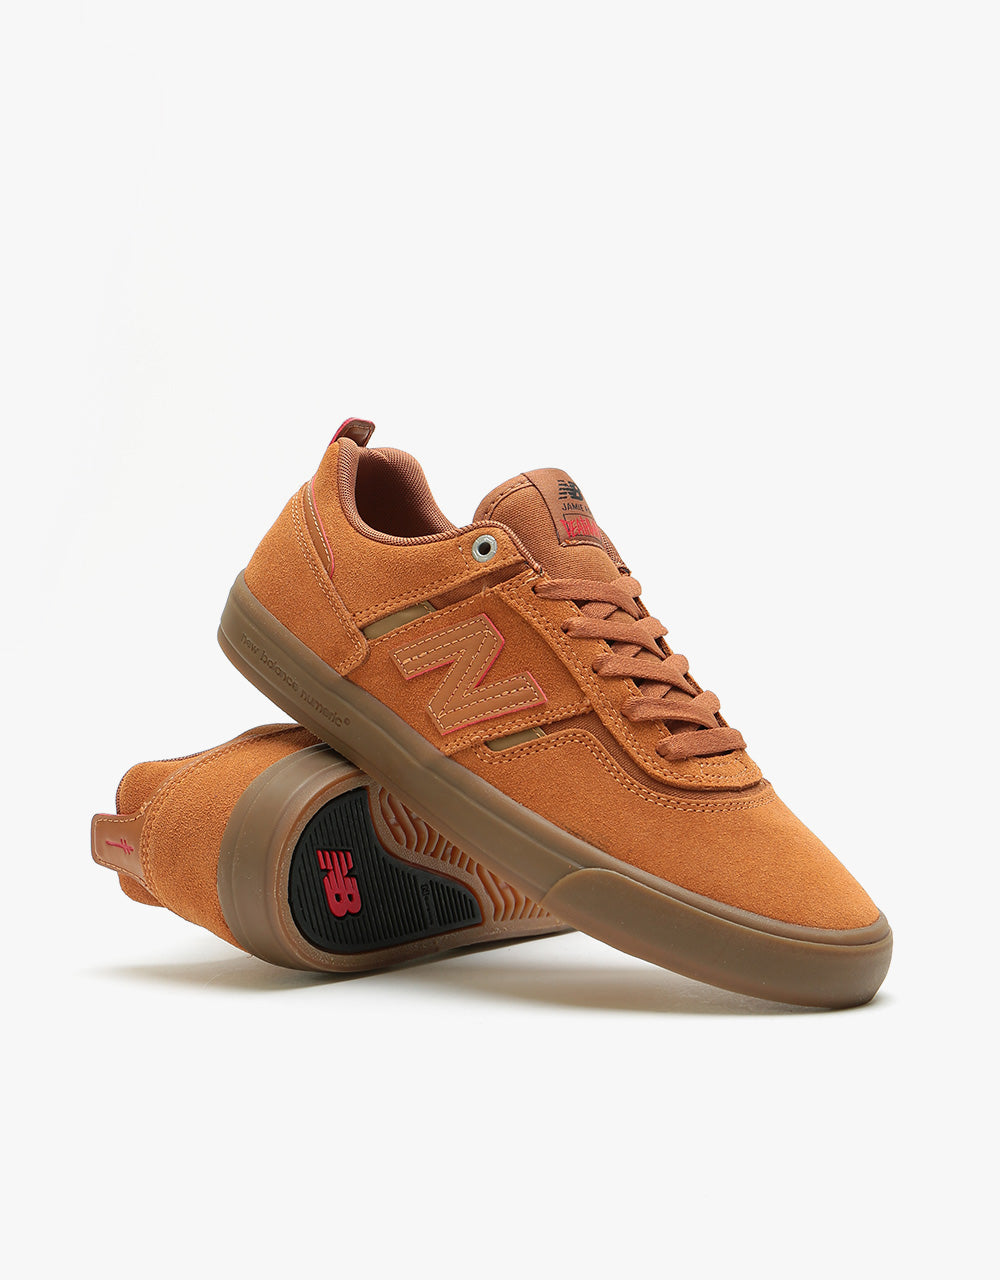 New Balance Numeric x Deathwish 306 Skate Shoes - Brown/Gum